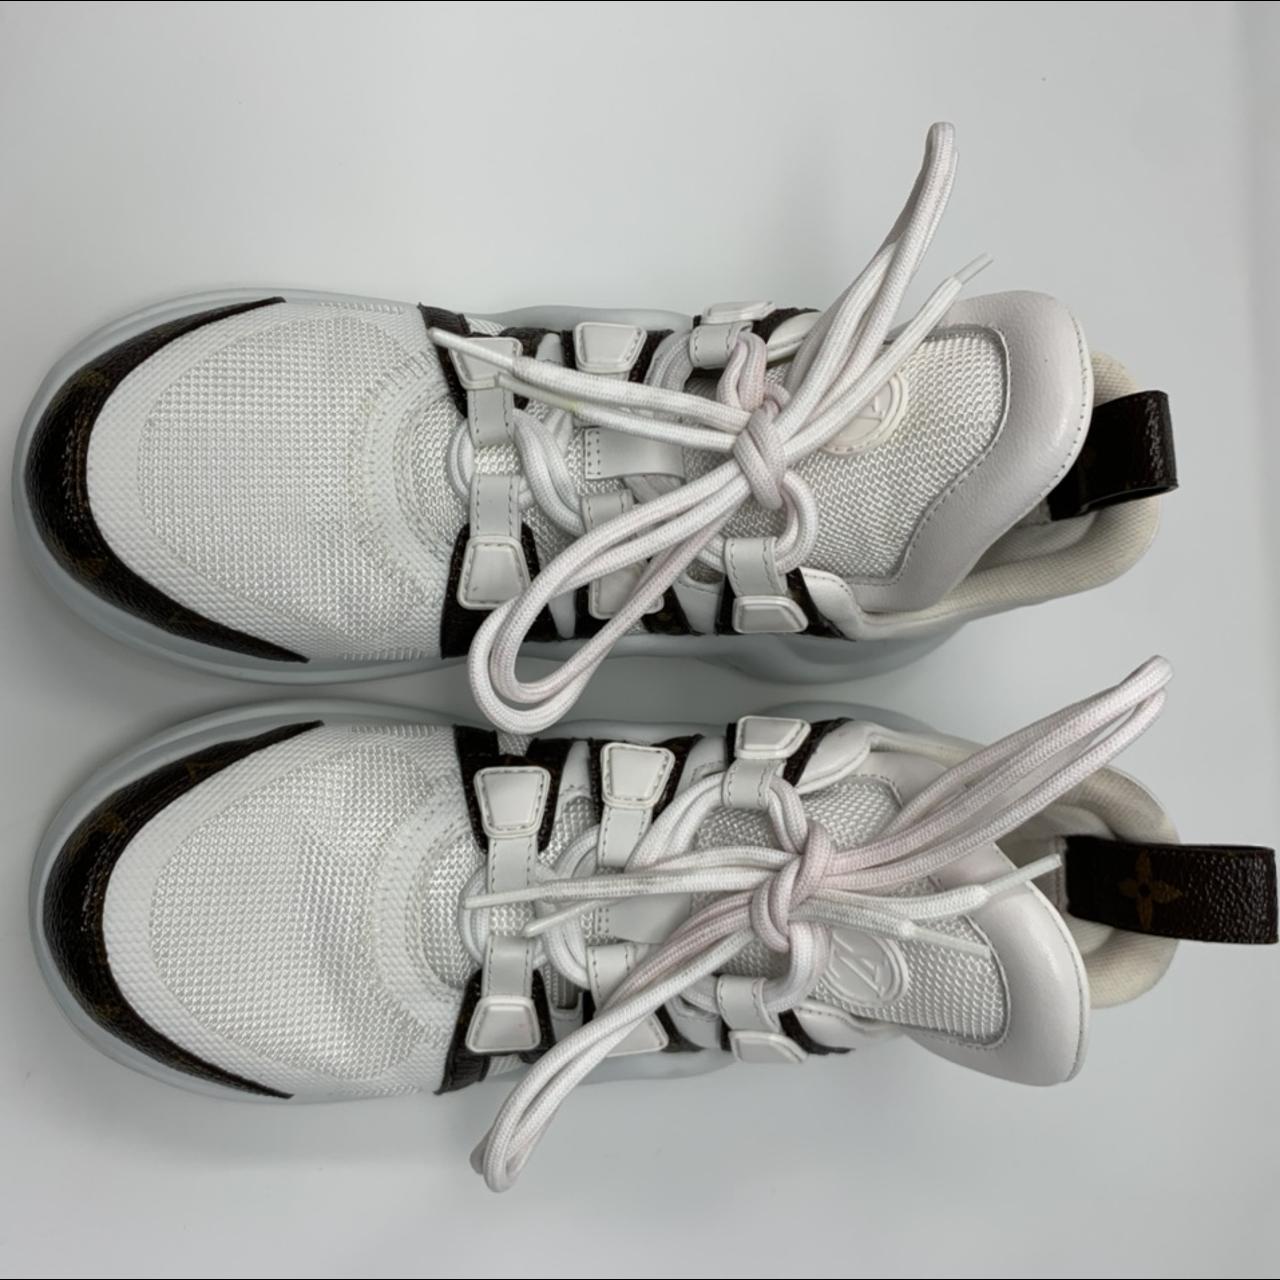 Louis Vuitton white archlight sneakers size 38 (us - Depop